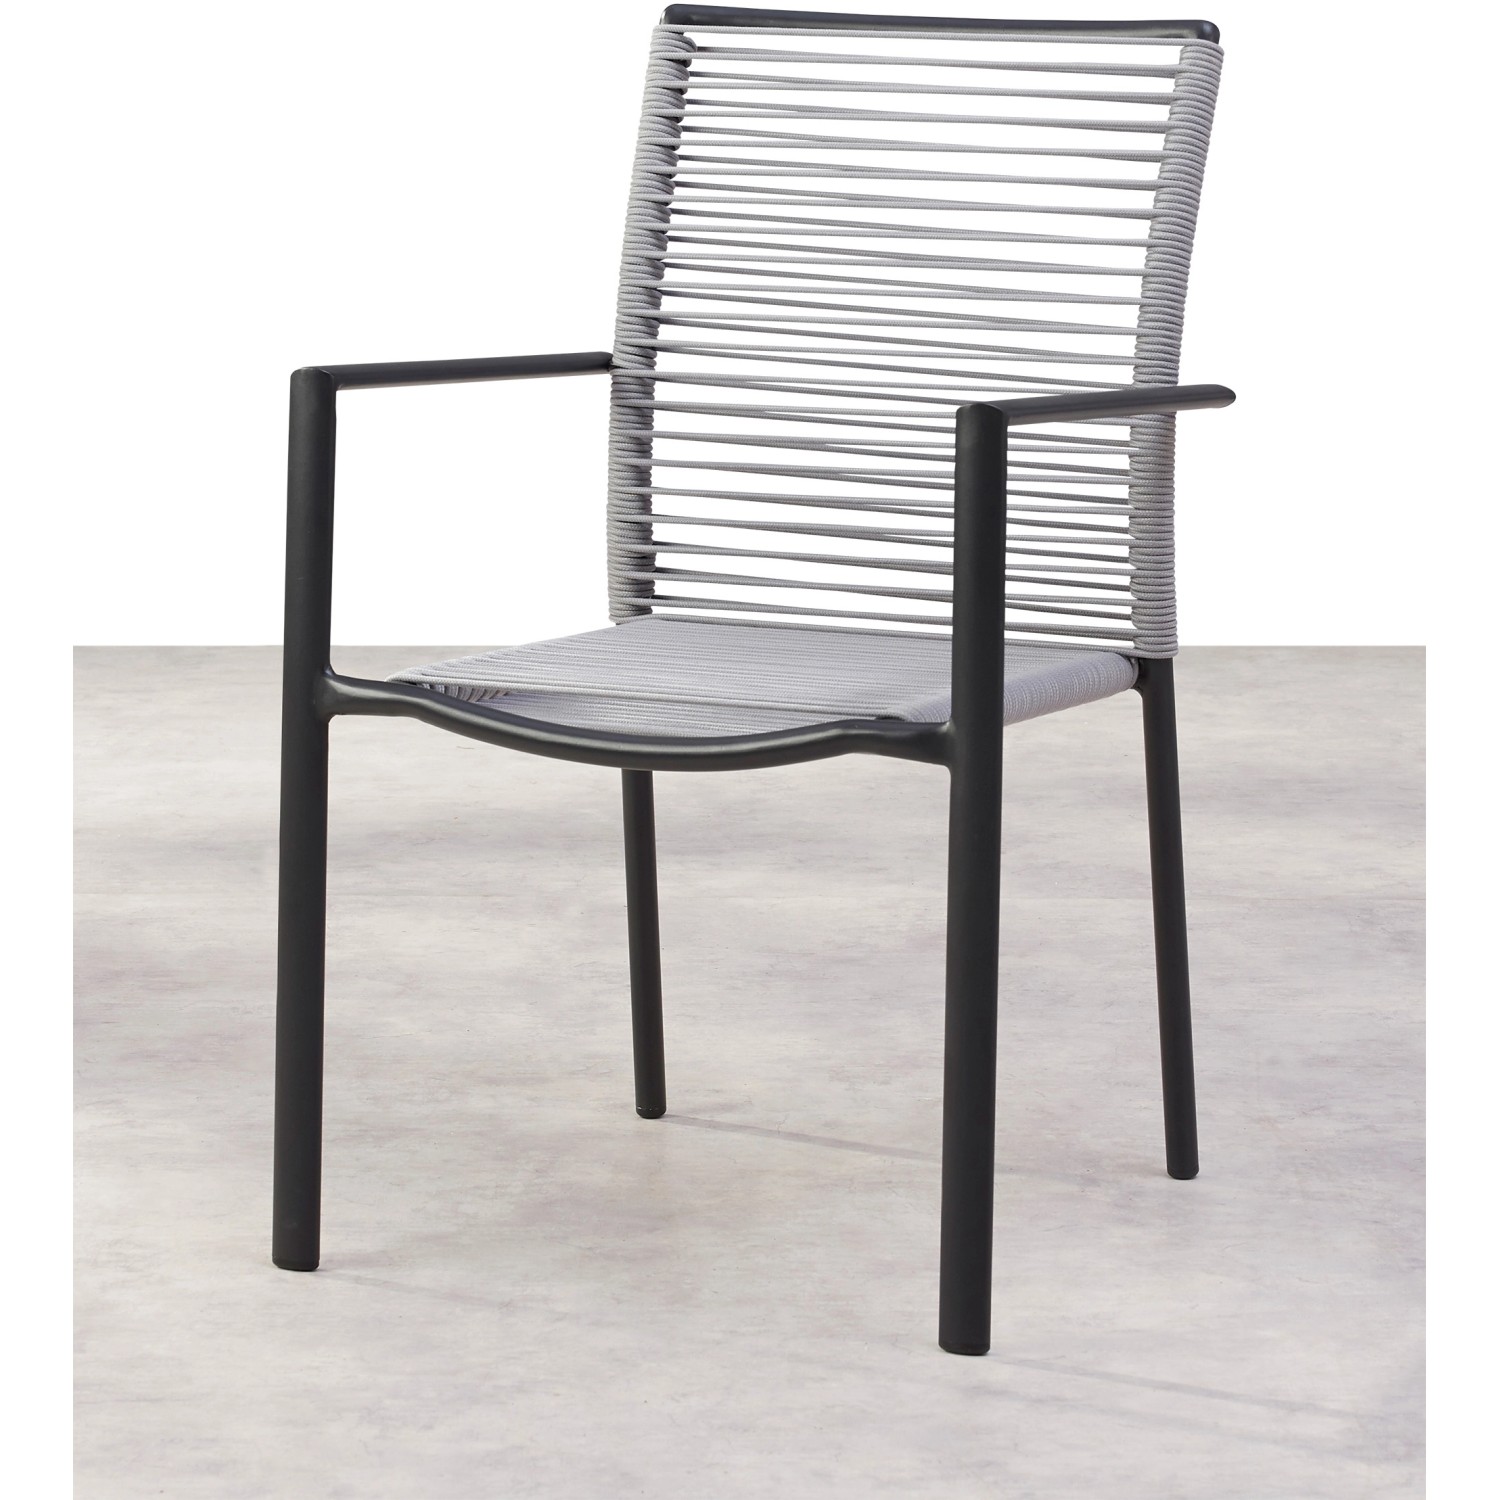 Vincenza Best 55 89 x cm cm Dining-Sessel bei Anthrazit/Grau OBI 62 cm x kaufen